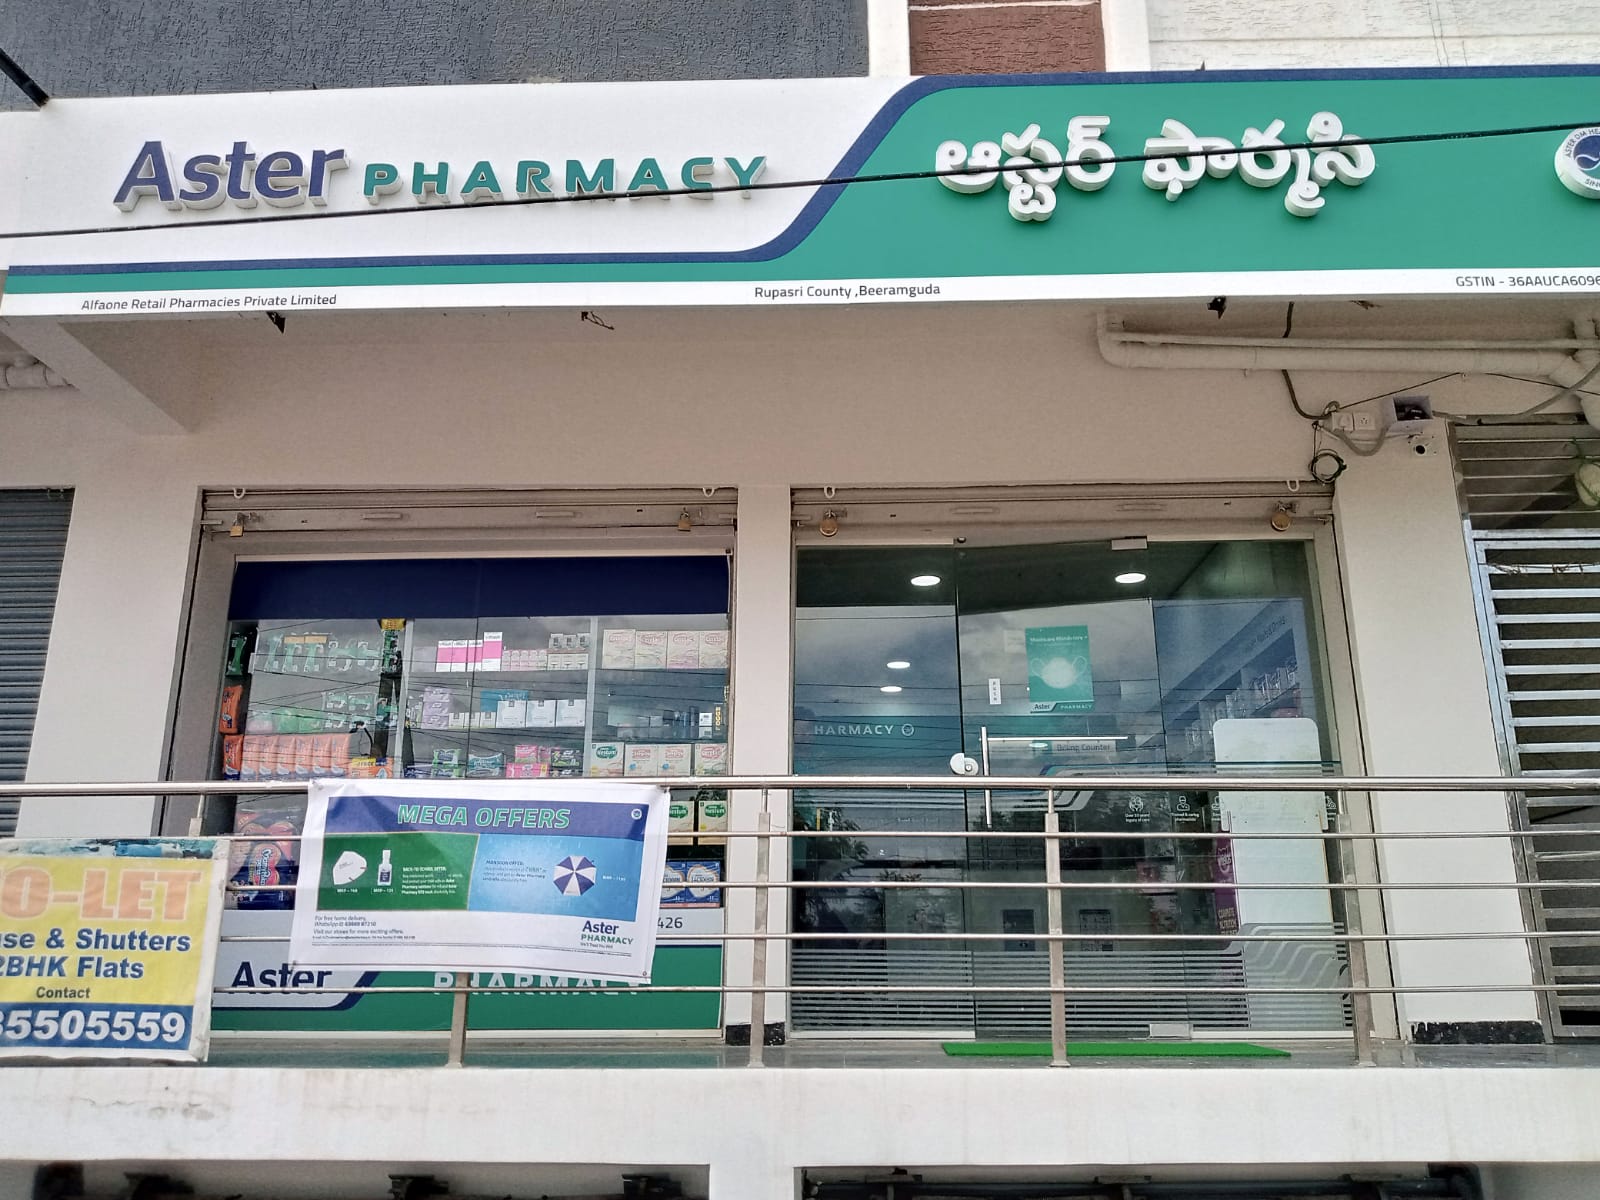 Aster Pharmacy in Rupasri County, Miyapur